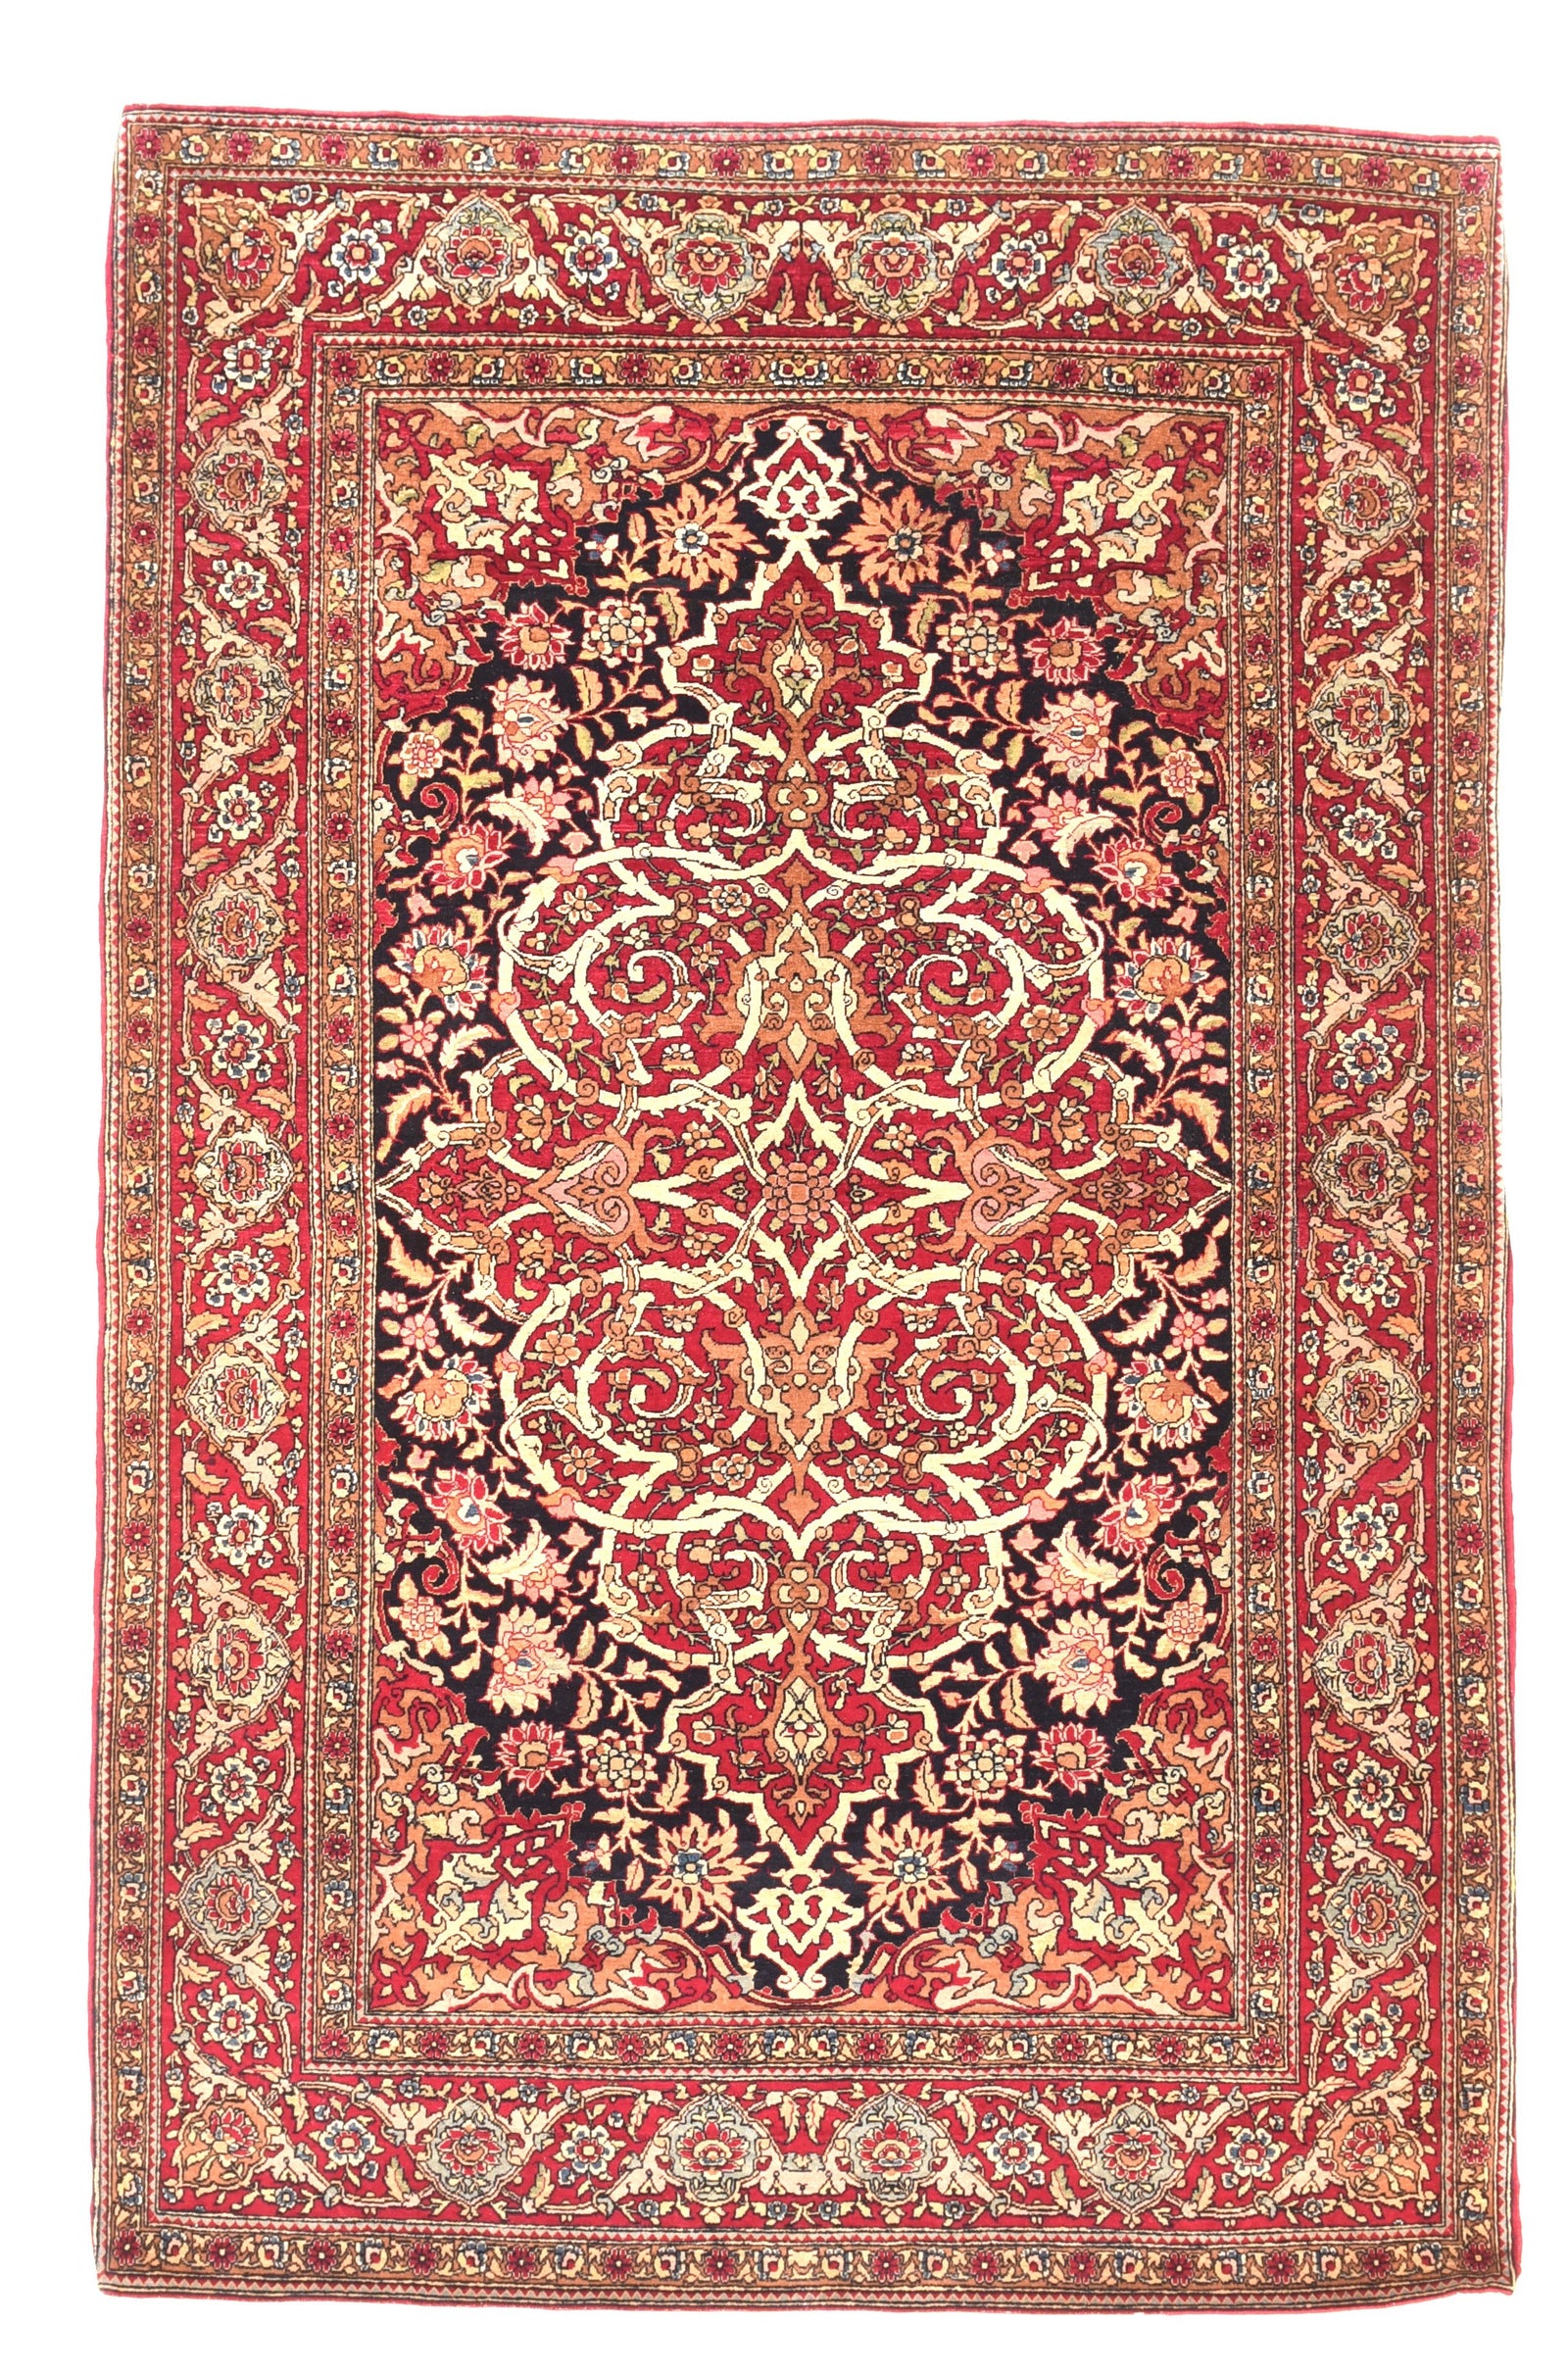 Antique Red Tehran Persian Area Rug